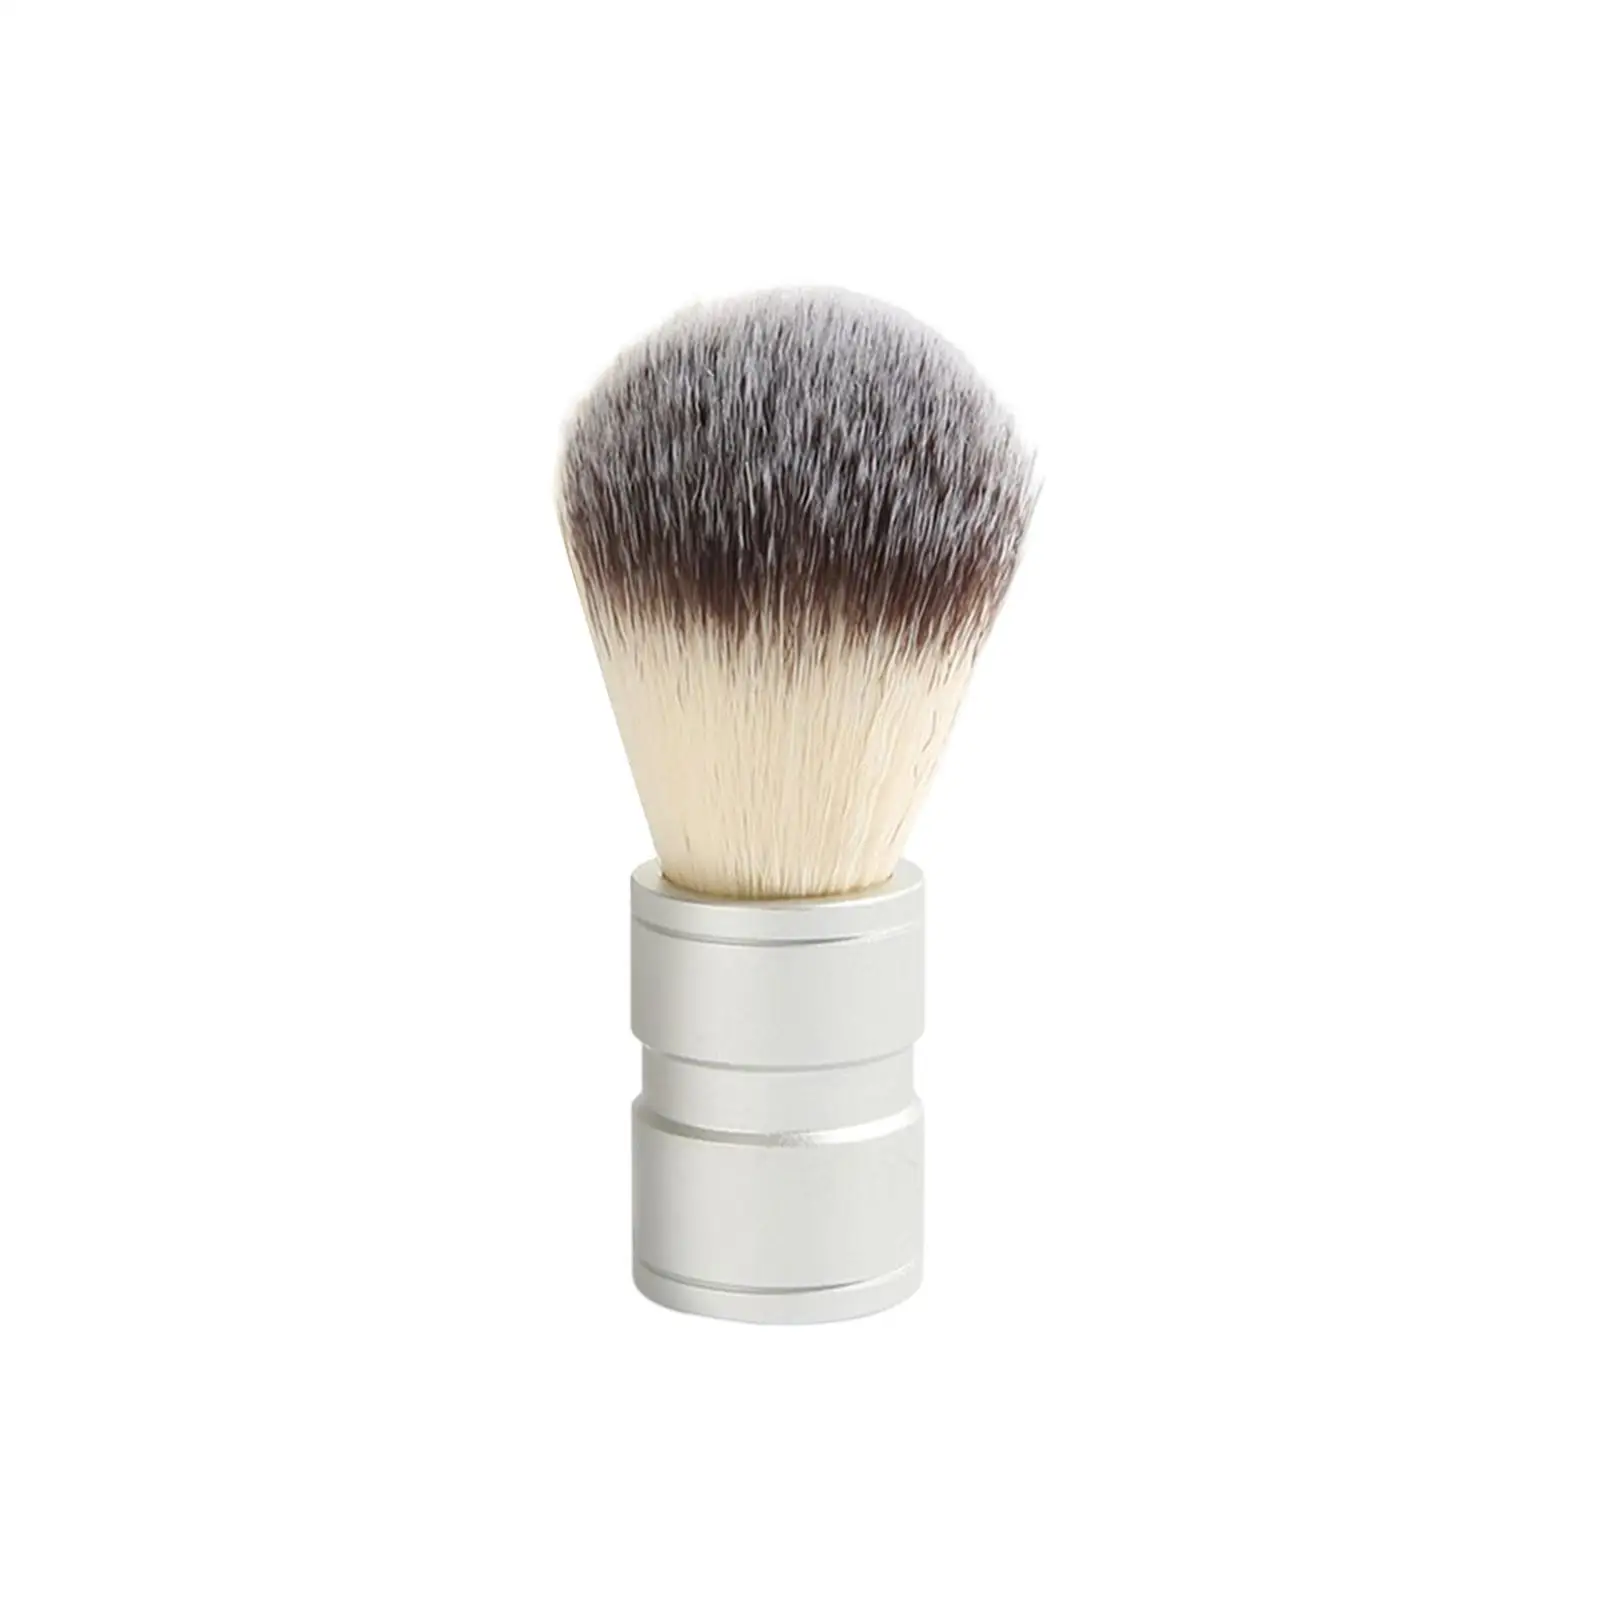 Hair Shaving Brush Lightweight Portable Smooth for Barbershop Birthday Gift